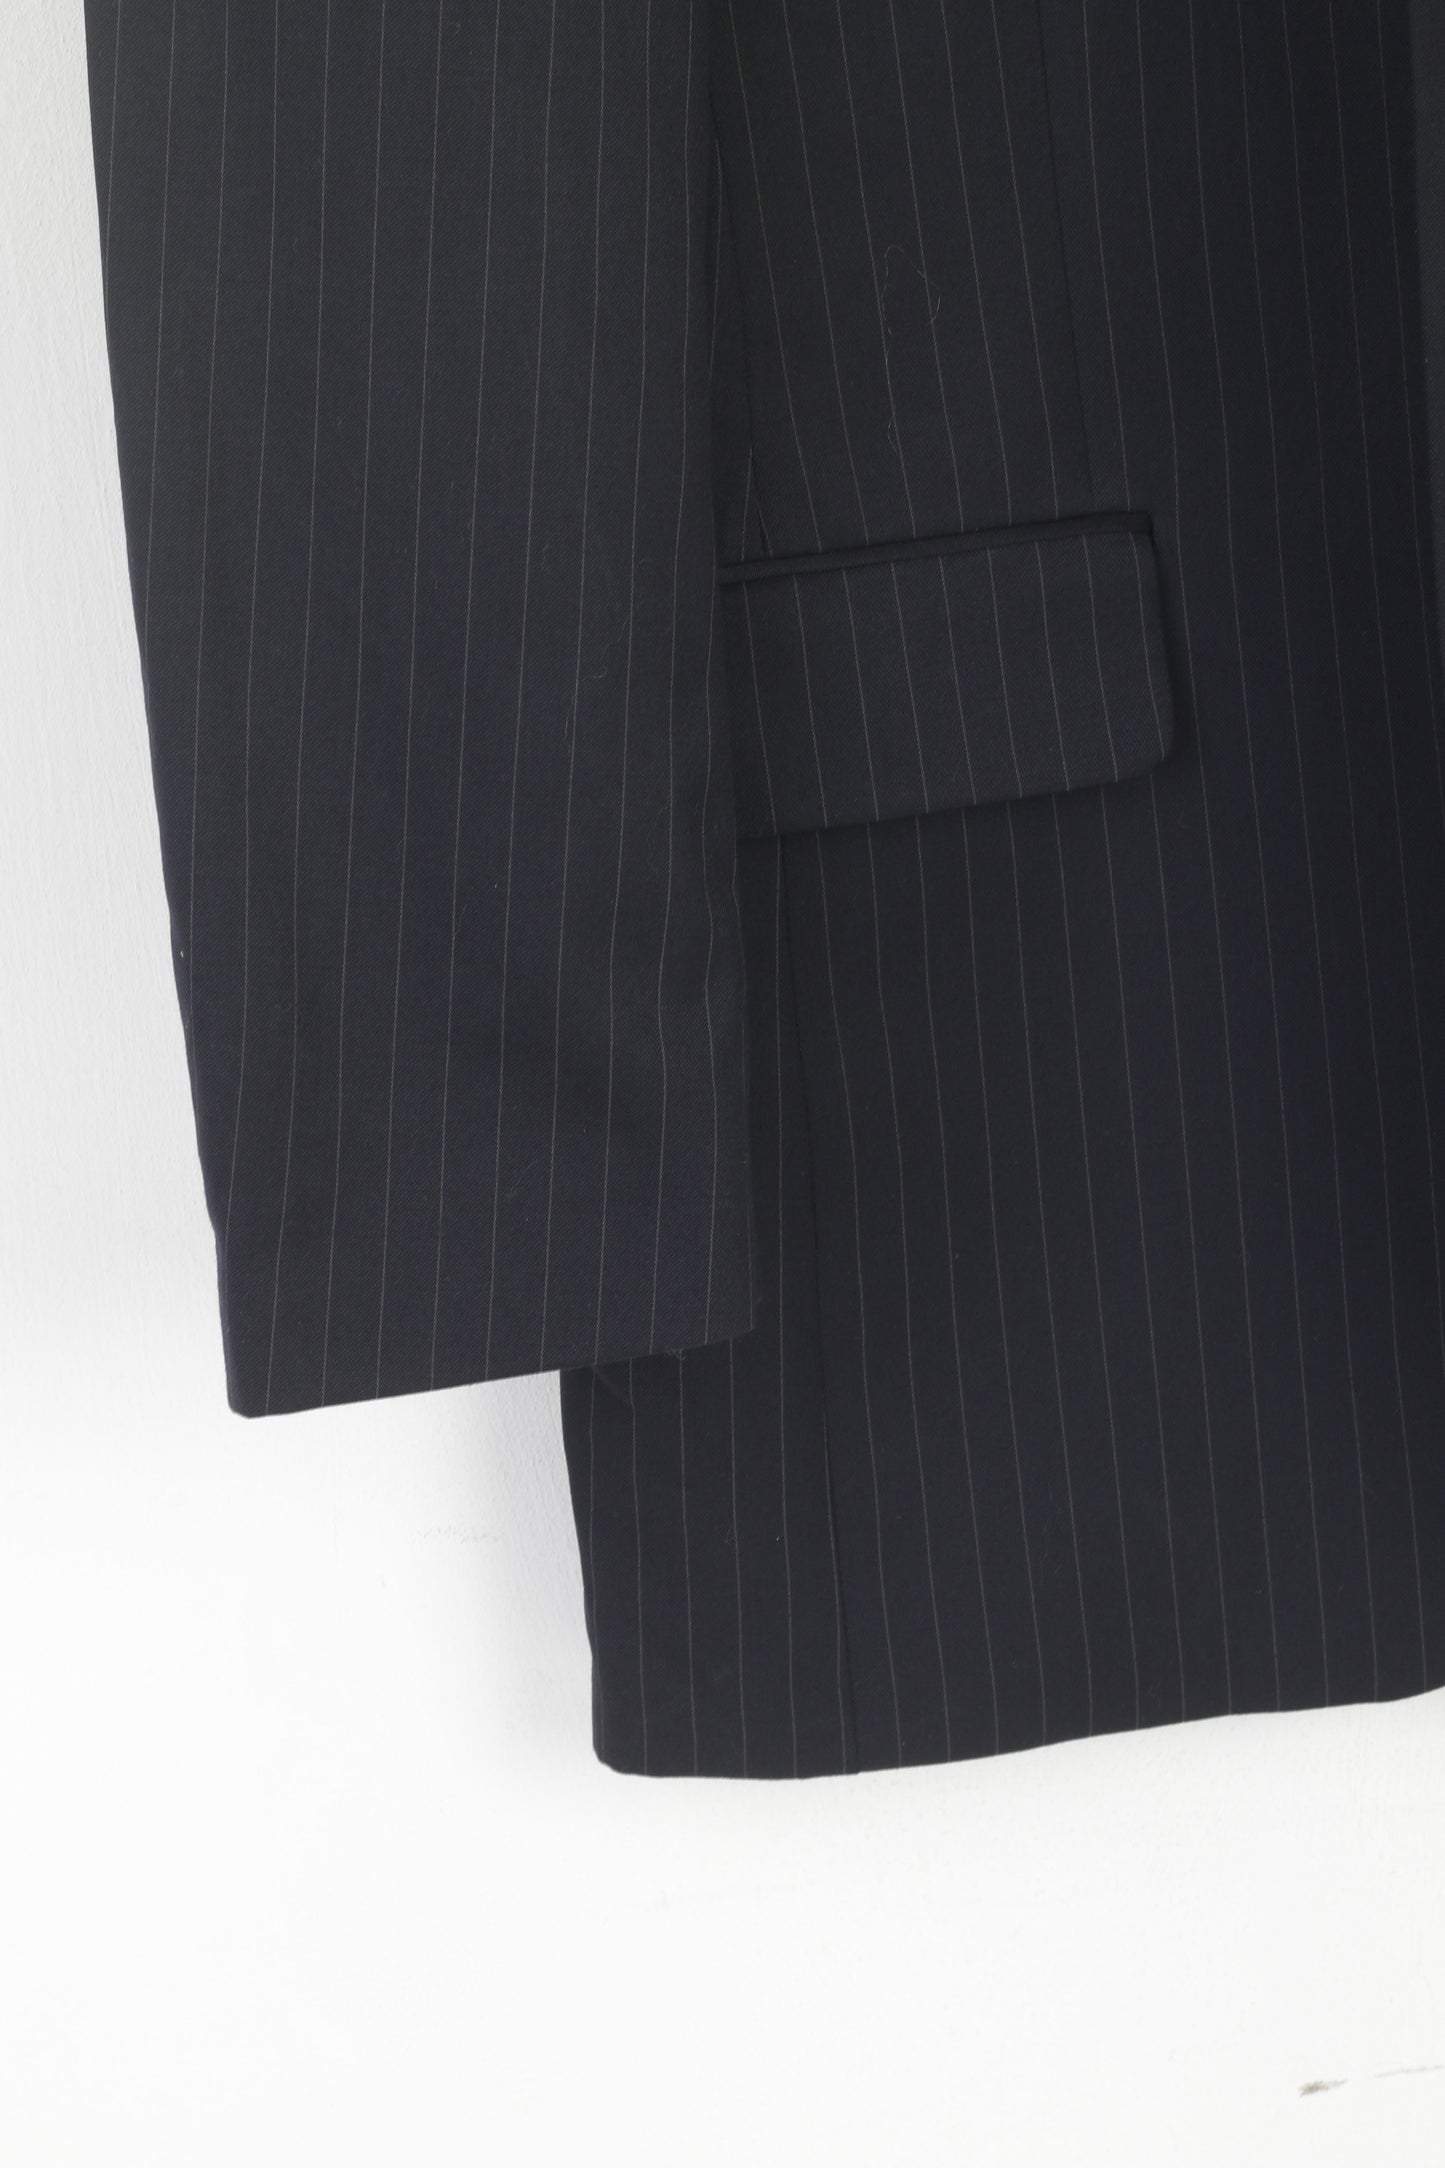 Roy Robson Men 38 Blazer Black Striped 100% Wool Italy Single Breasted Jacket